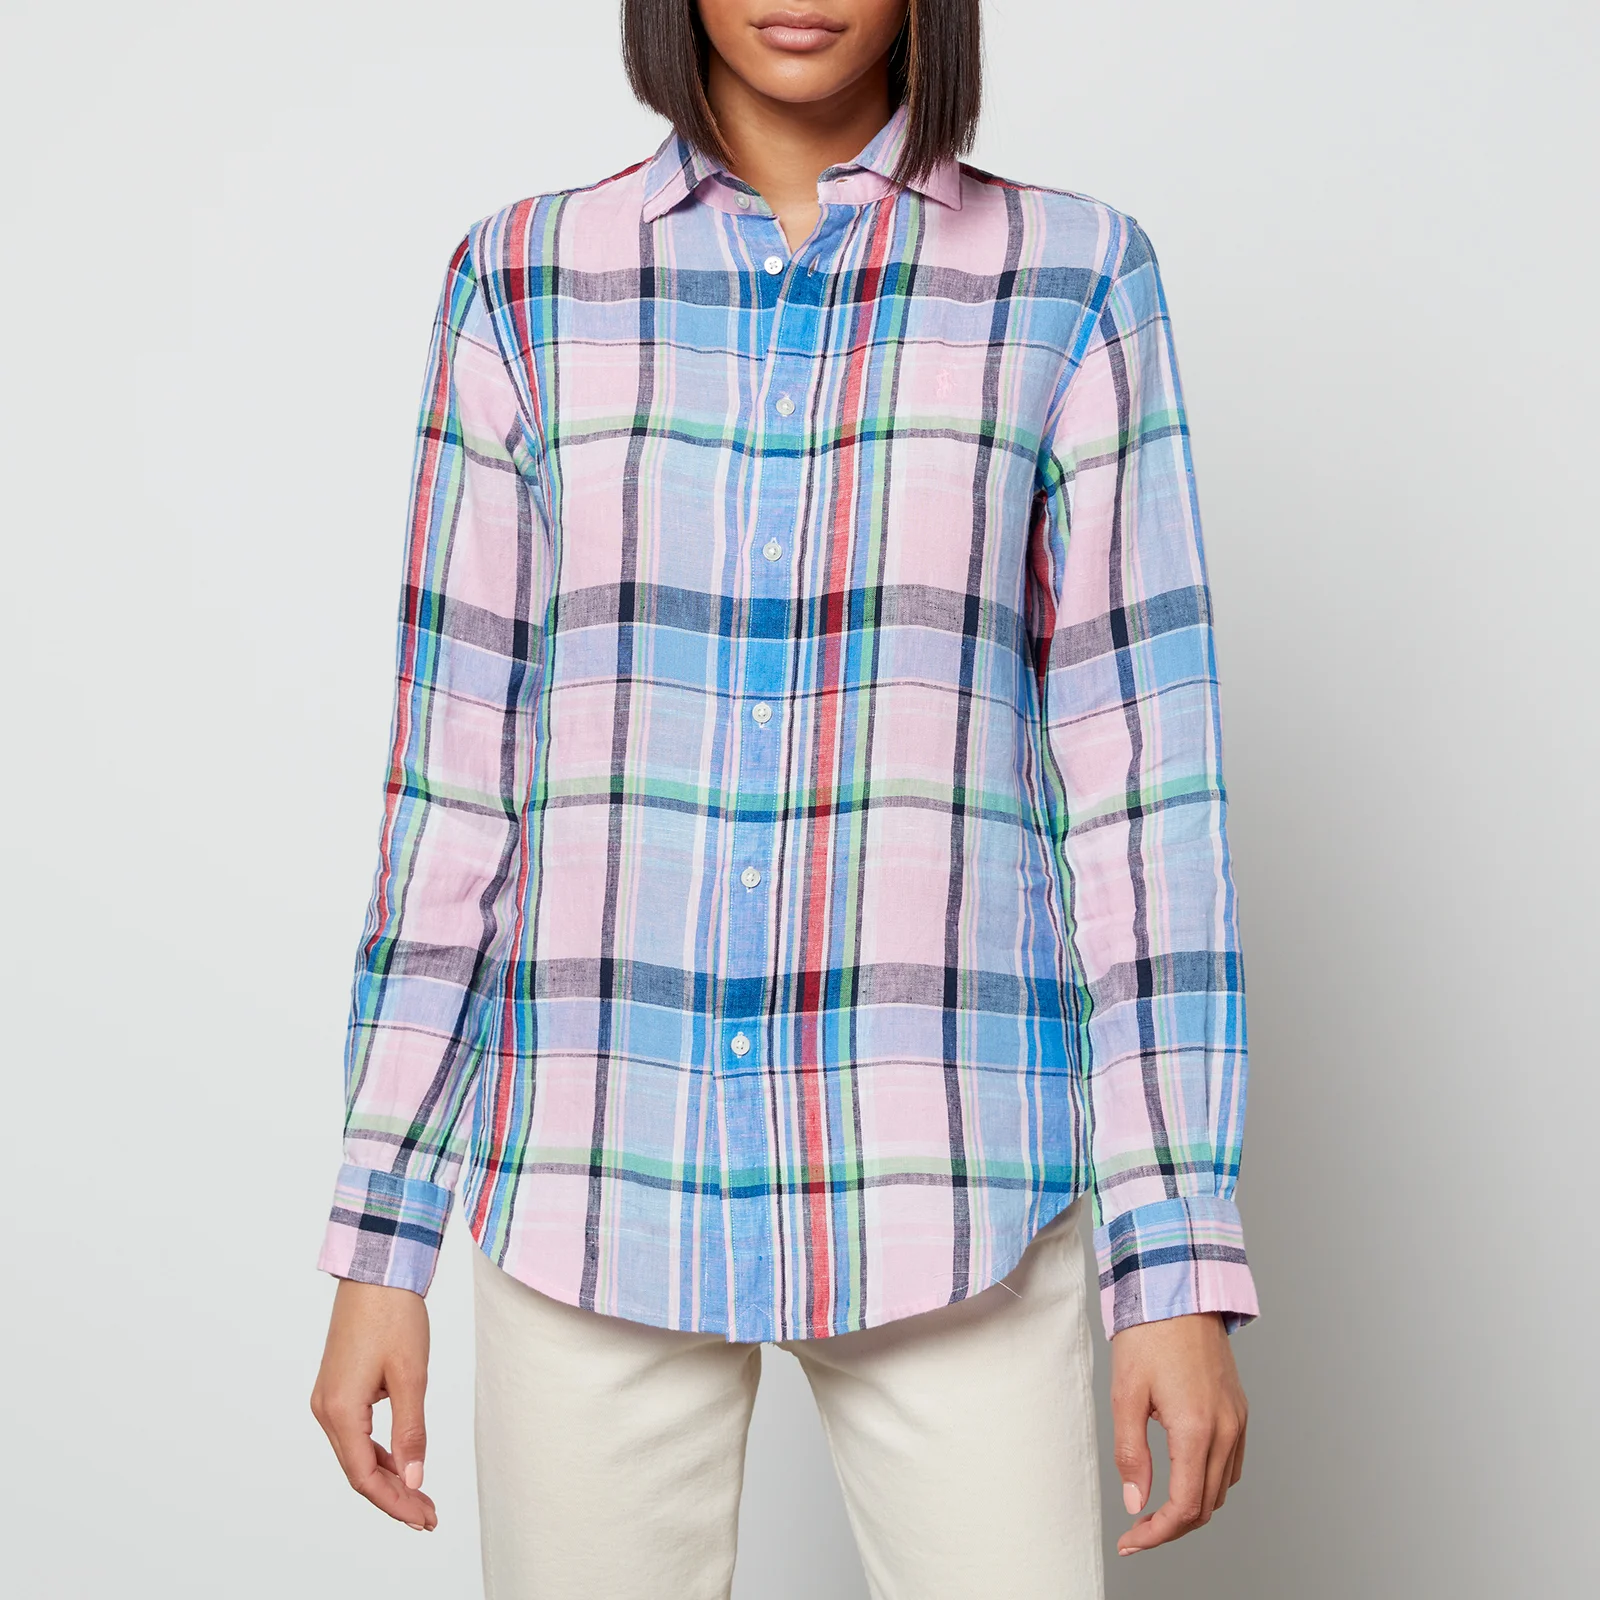 Polo Ralph Lauren Women's Georgia Slim Fit Shirt - 1183 Pink-Blue Multi Image 1